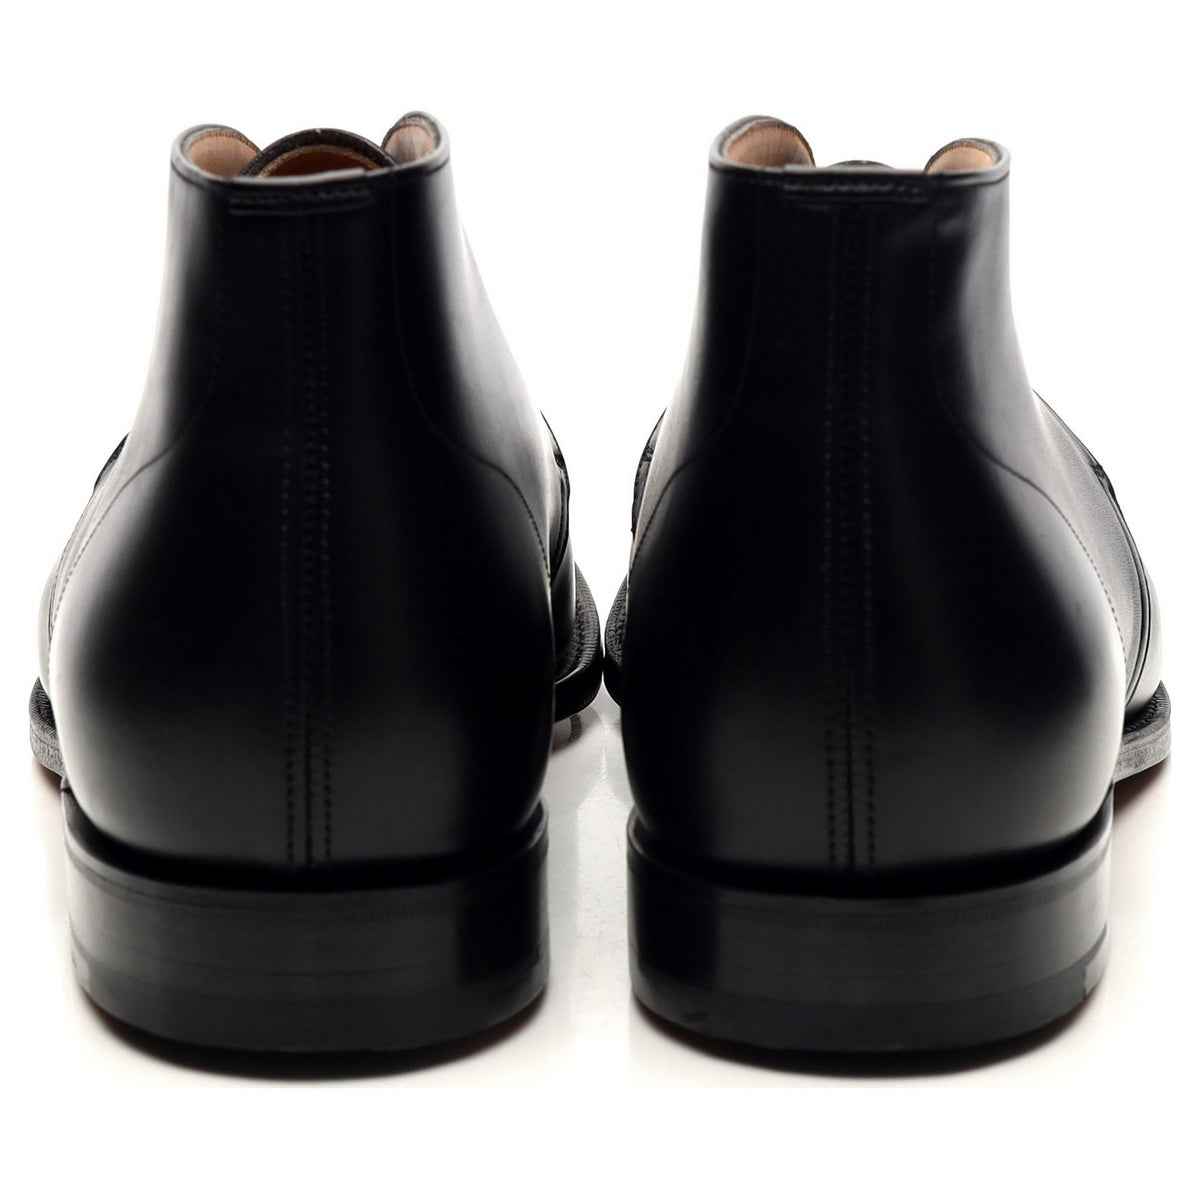 &#39;Amsterdam&#39; Black Leather Chukka Boots UK 9.5 F